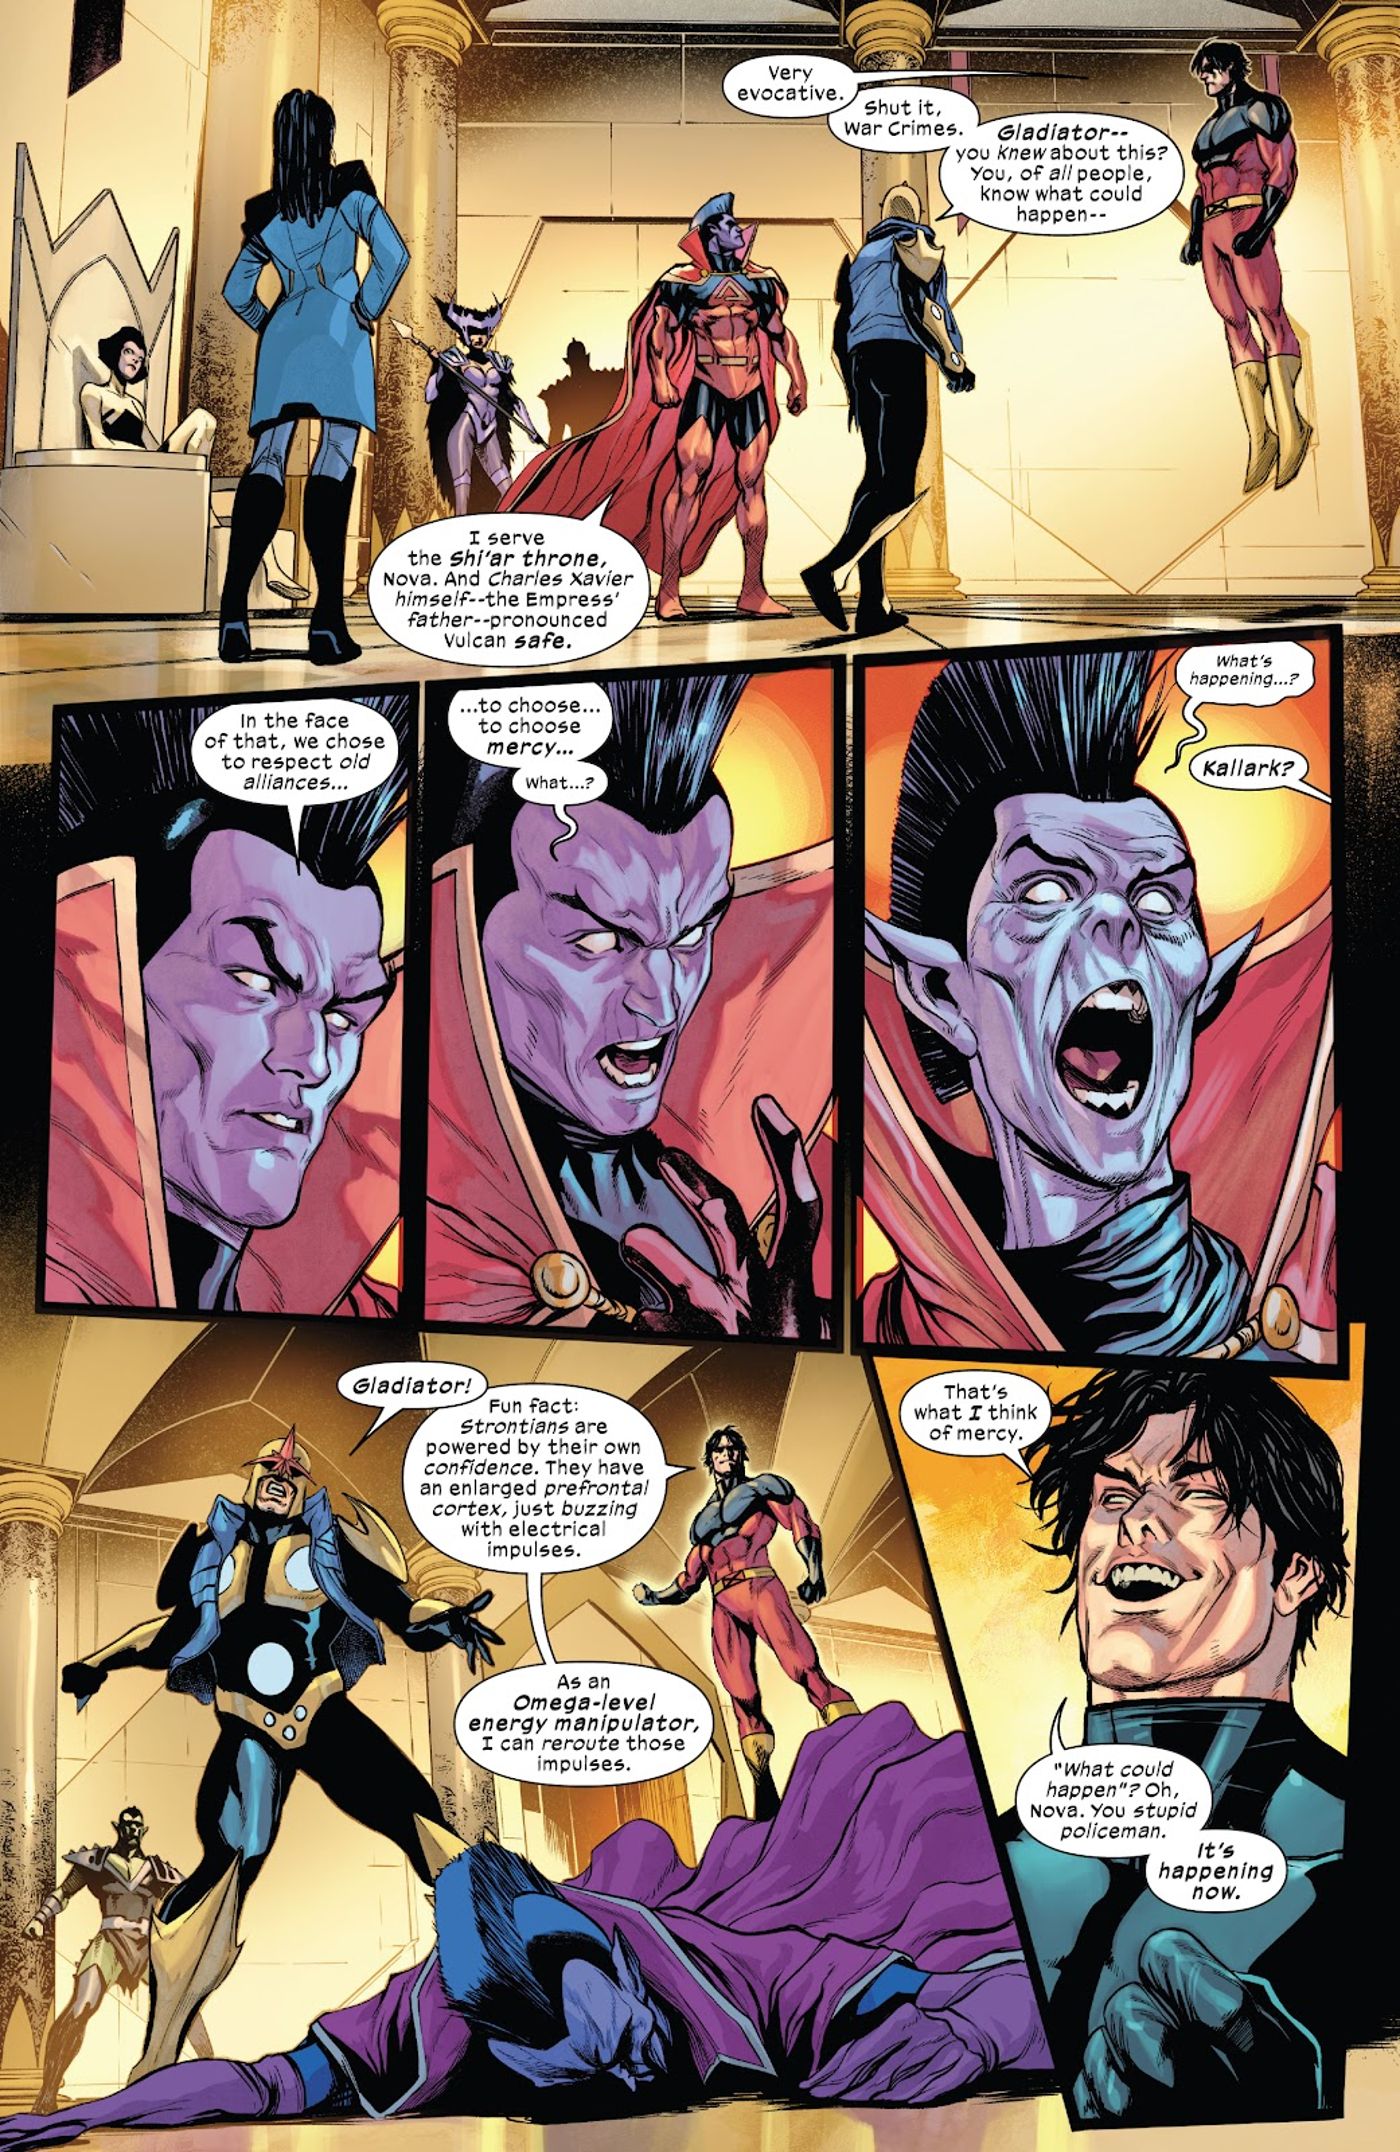 Vulcan vence Gladiator em X-Men Red.